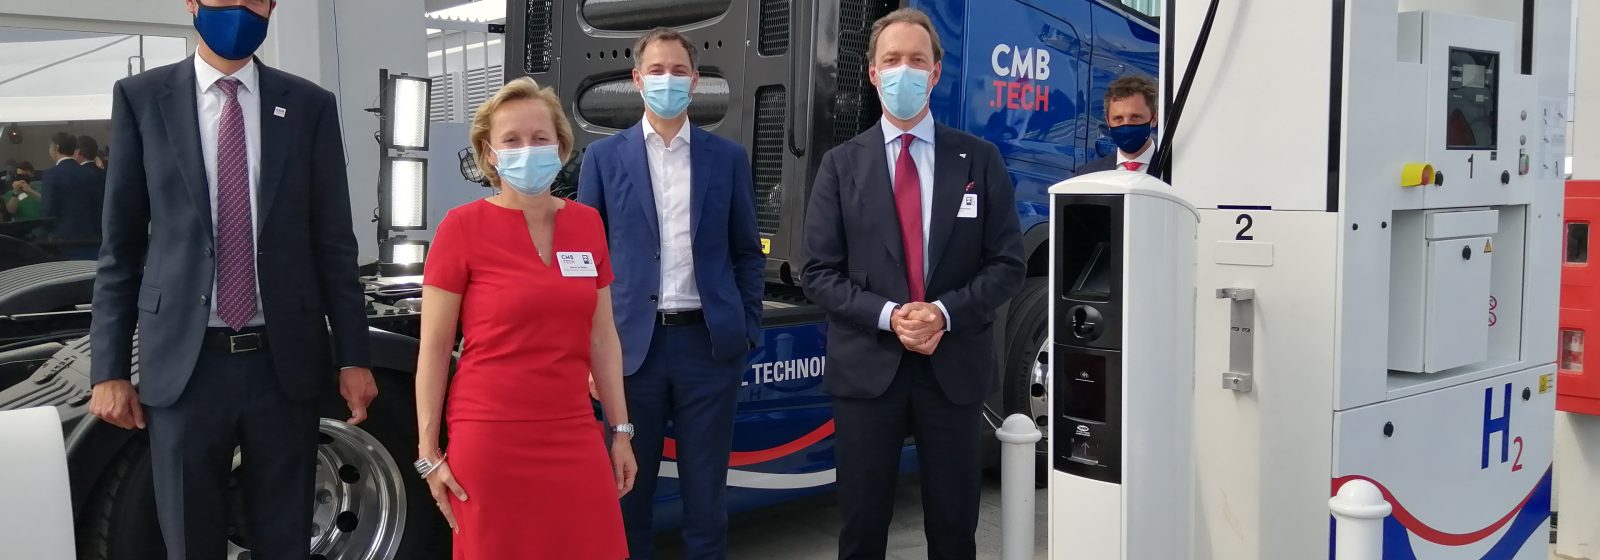 Redersgroep CMB opent 's werelds eerste multimodale waterstoftankstation in Antwerpse haven